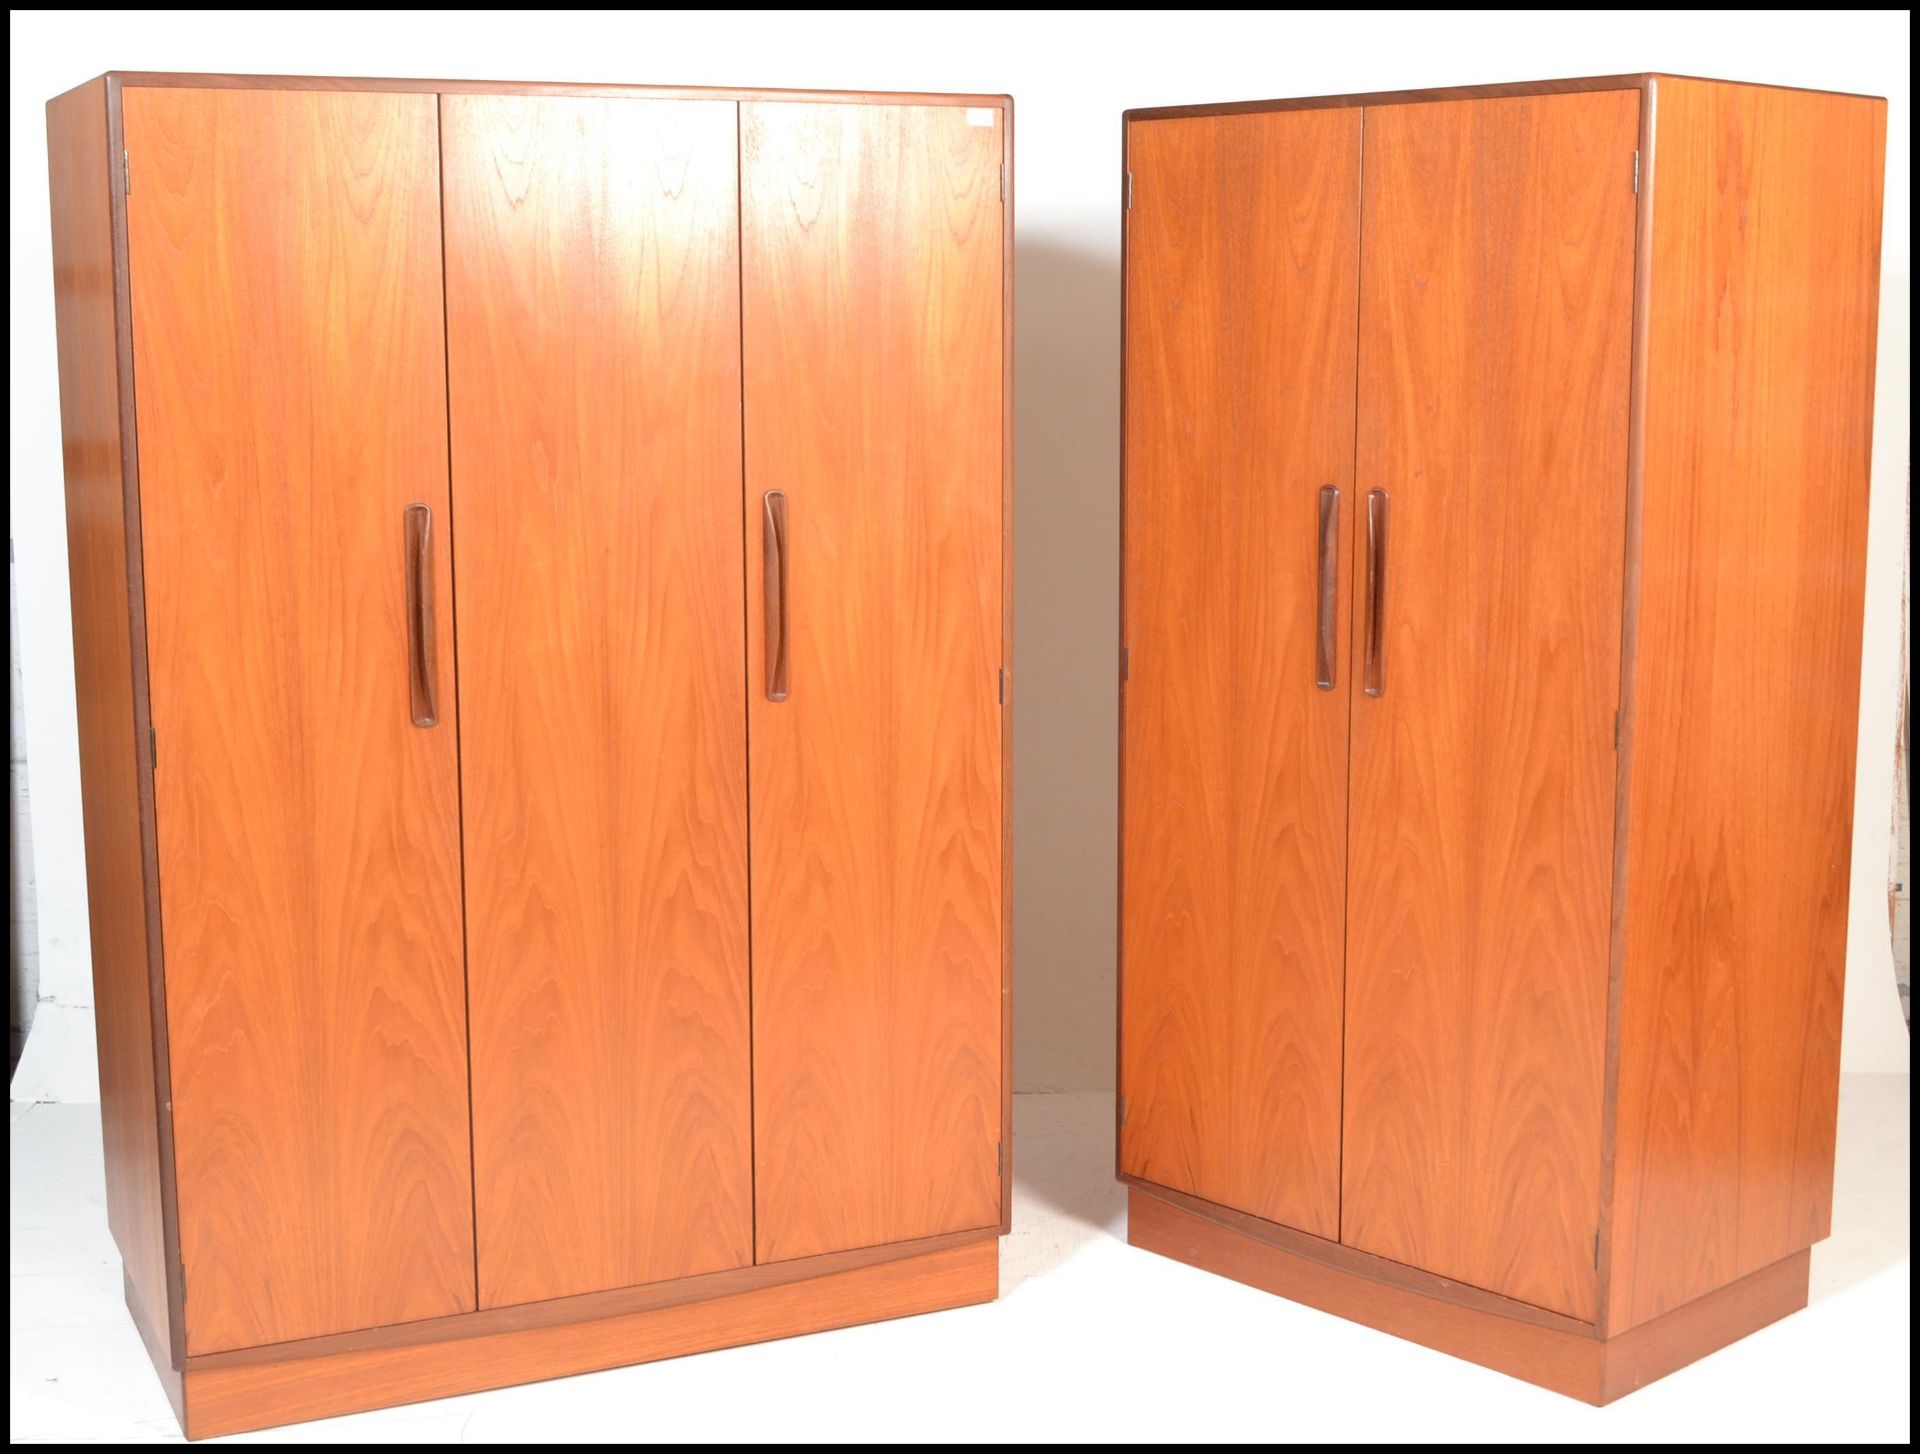 A G-Plan 20th century teak wood double door wardrobe and triple door wardrobe in the ' Kelso '